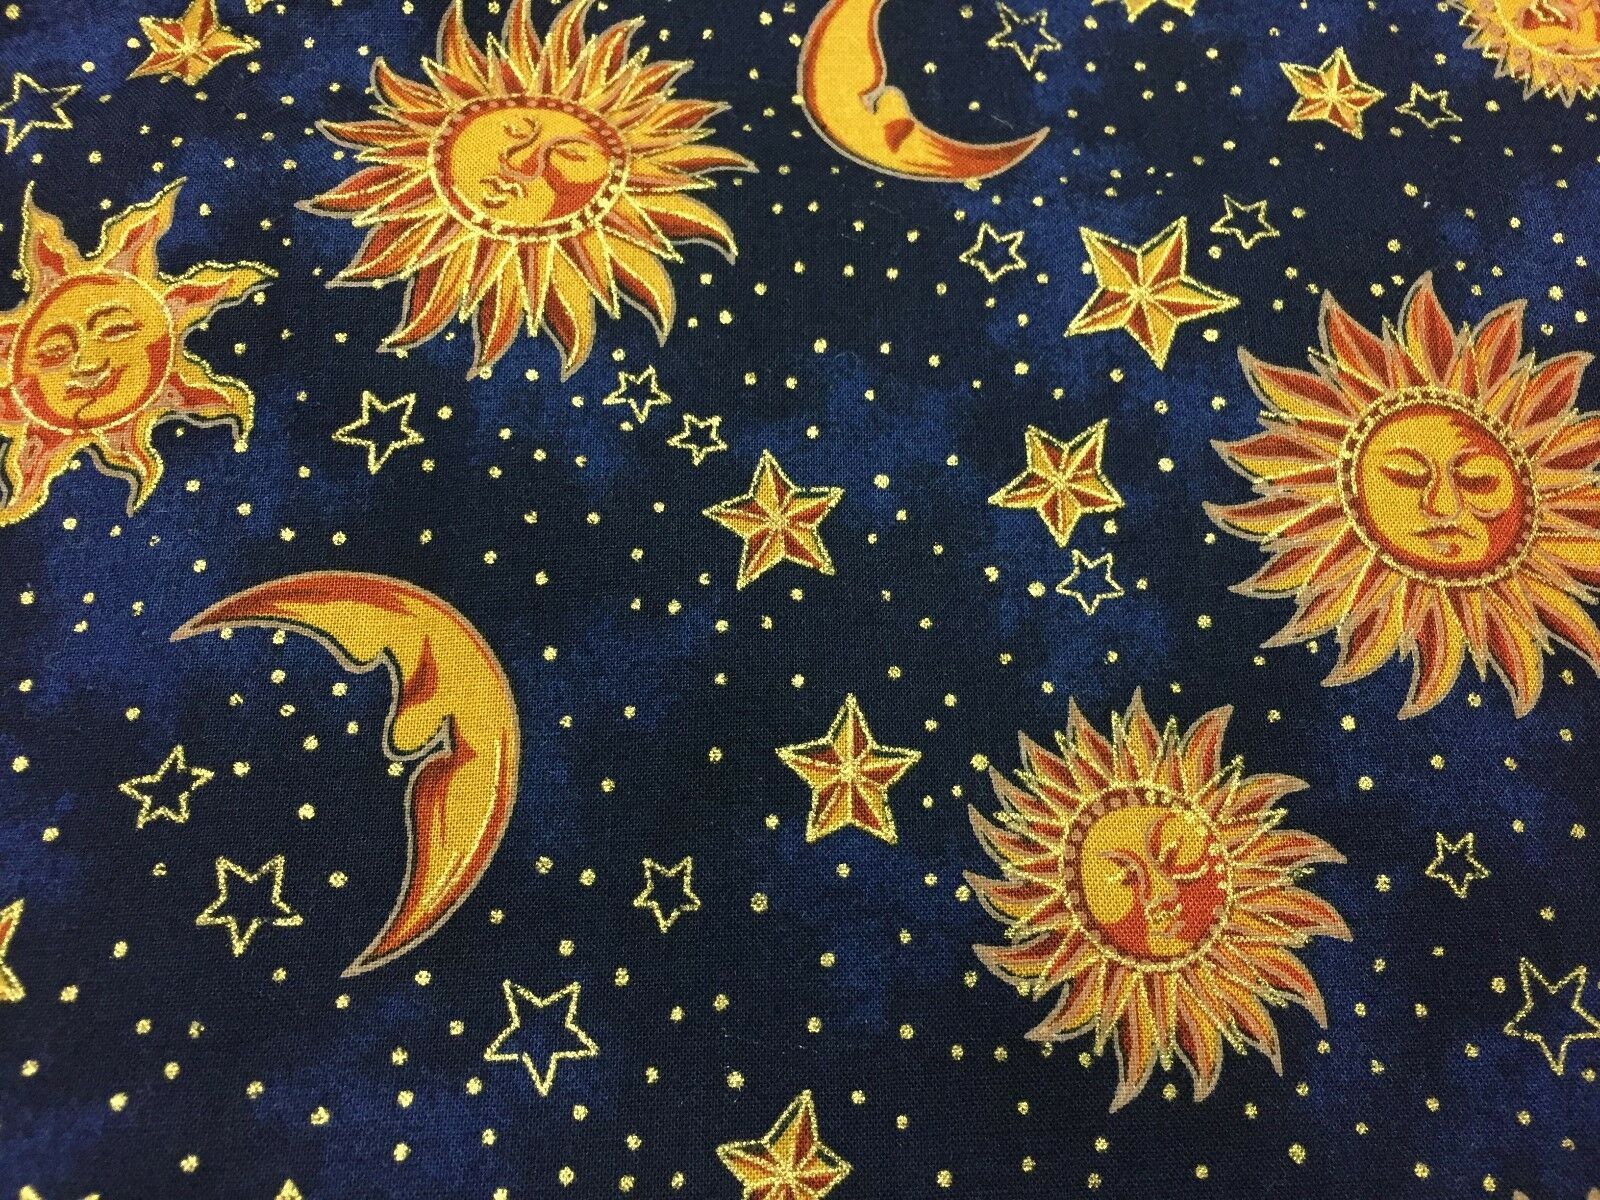 Aesthetic sun and moon wallpaper